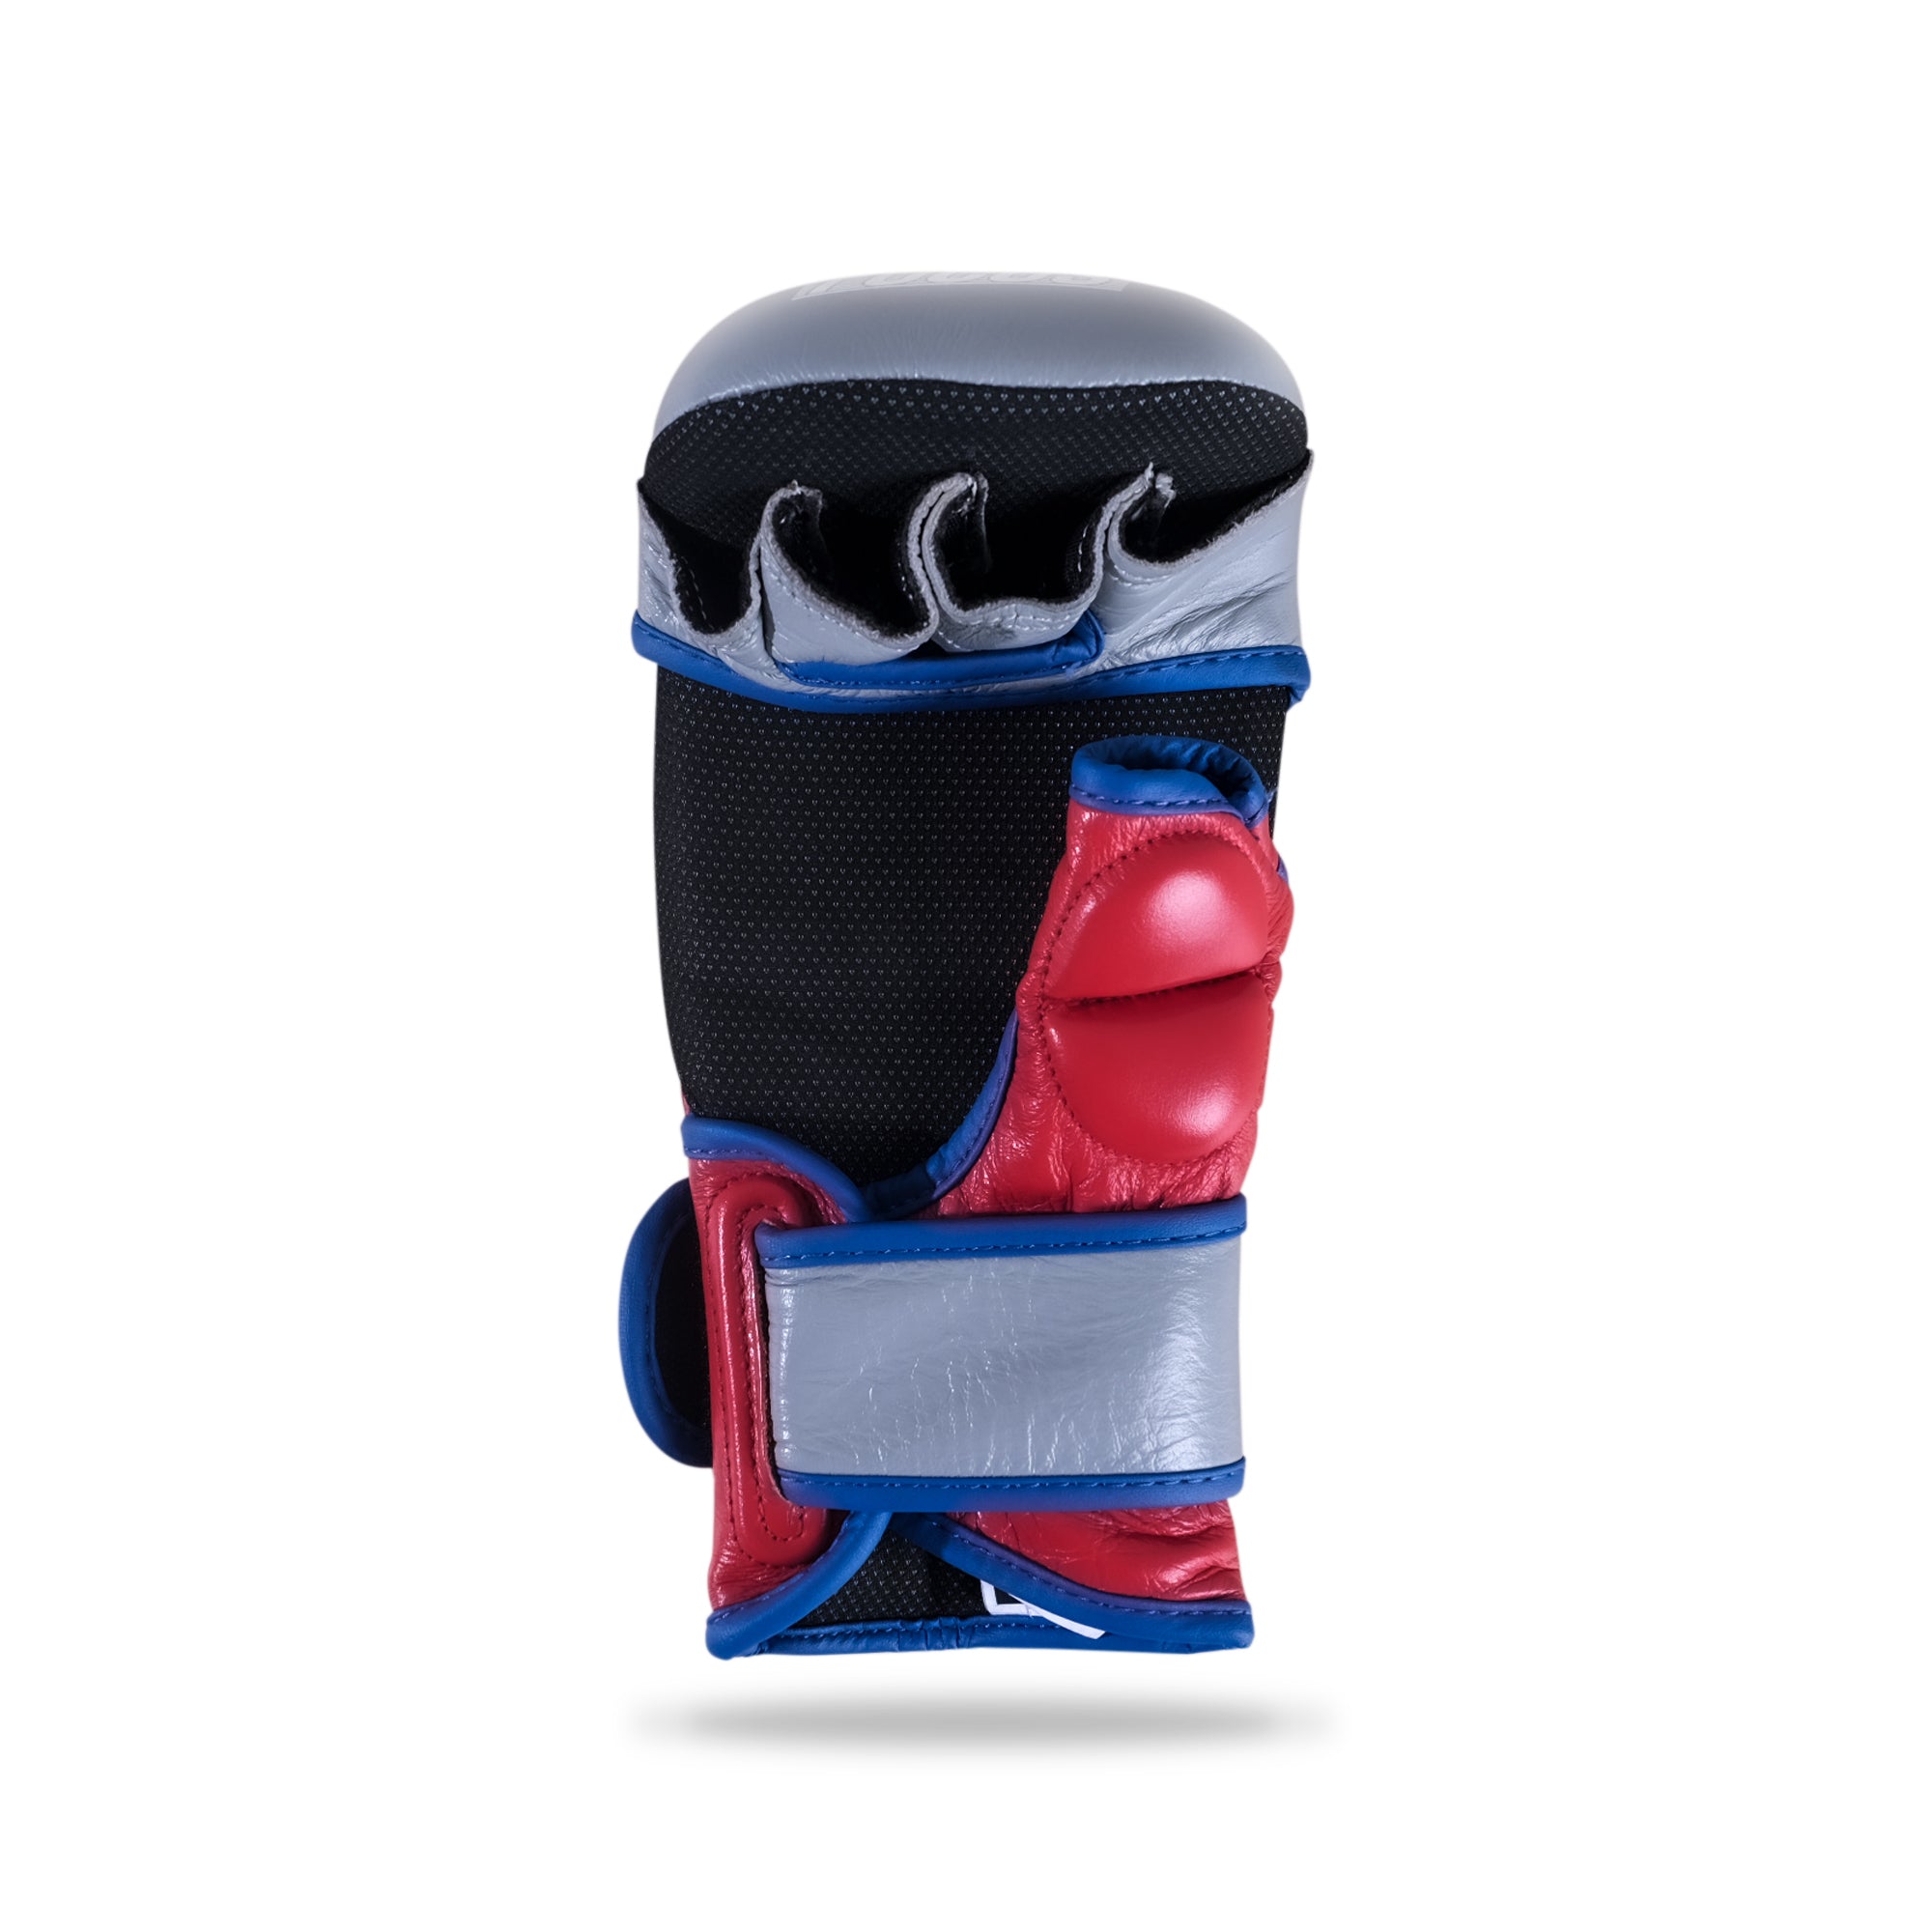 Focus Imperial MMA Hybrid Sparring Gloves